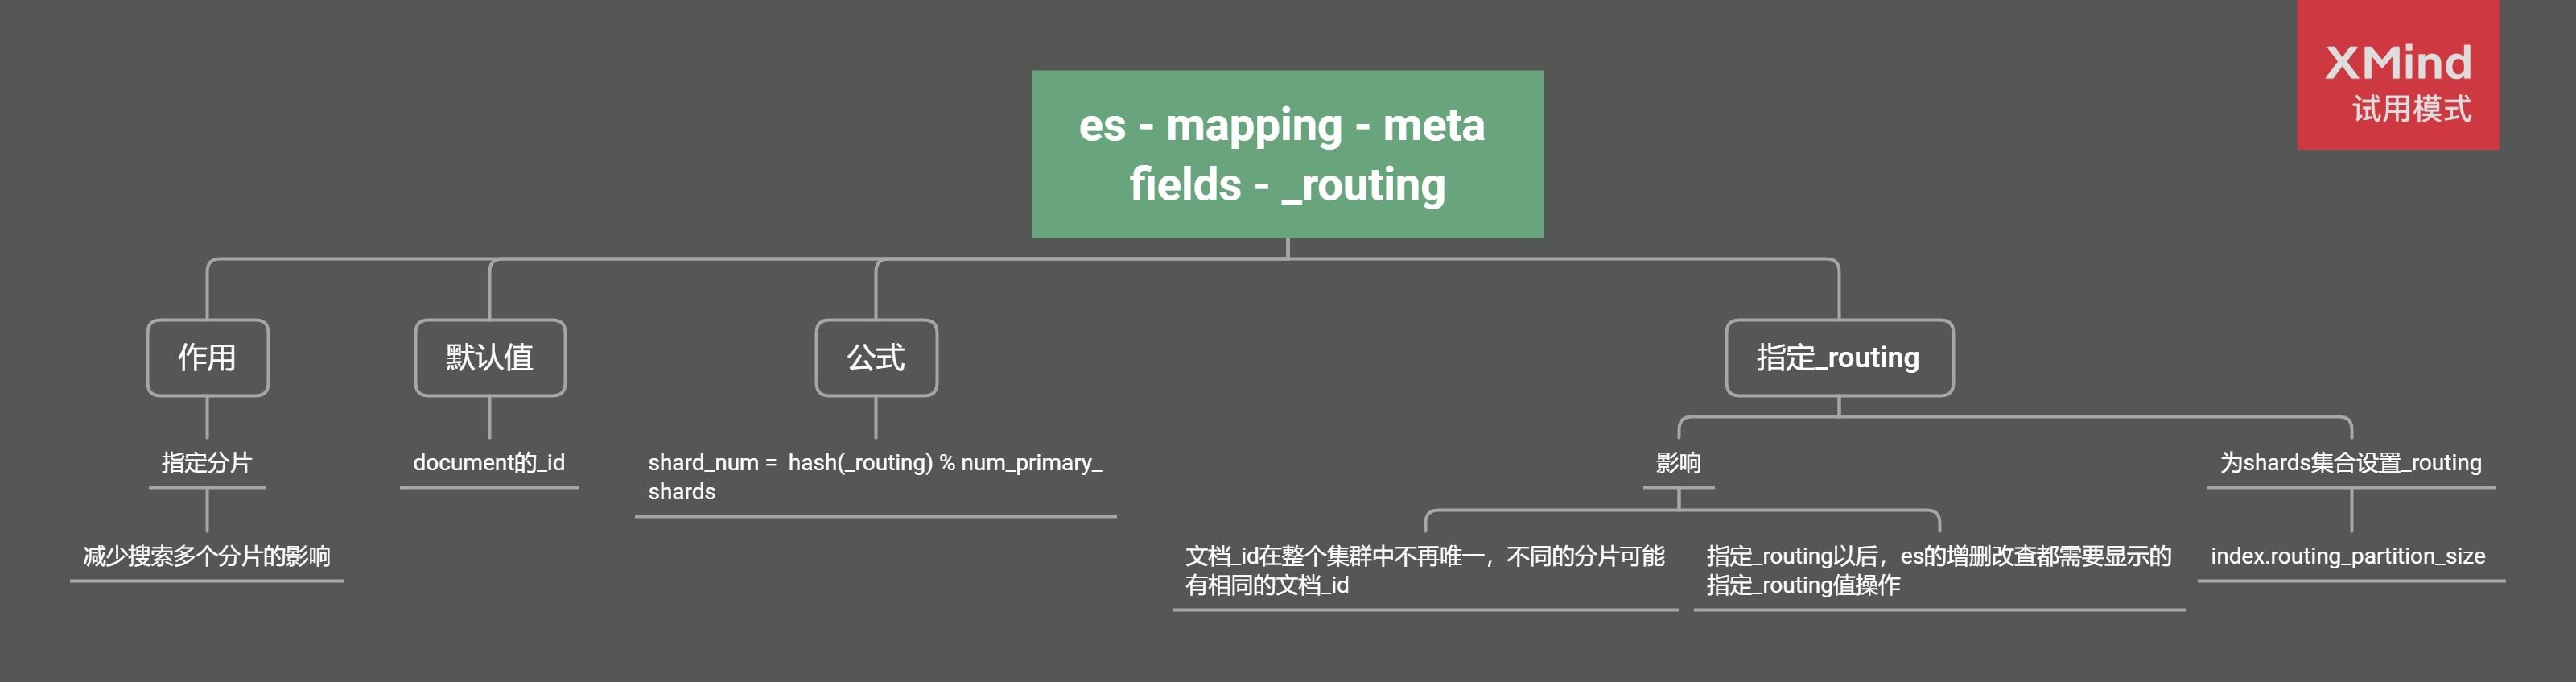 es - elasticsearch mapping - meta fields - 7 - 文章图片